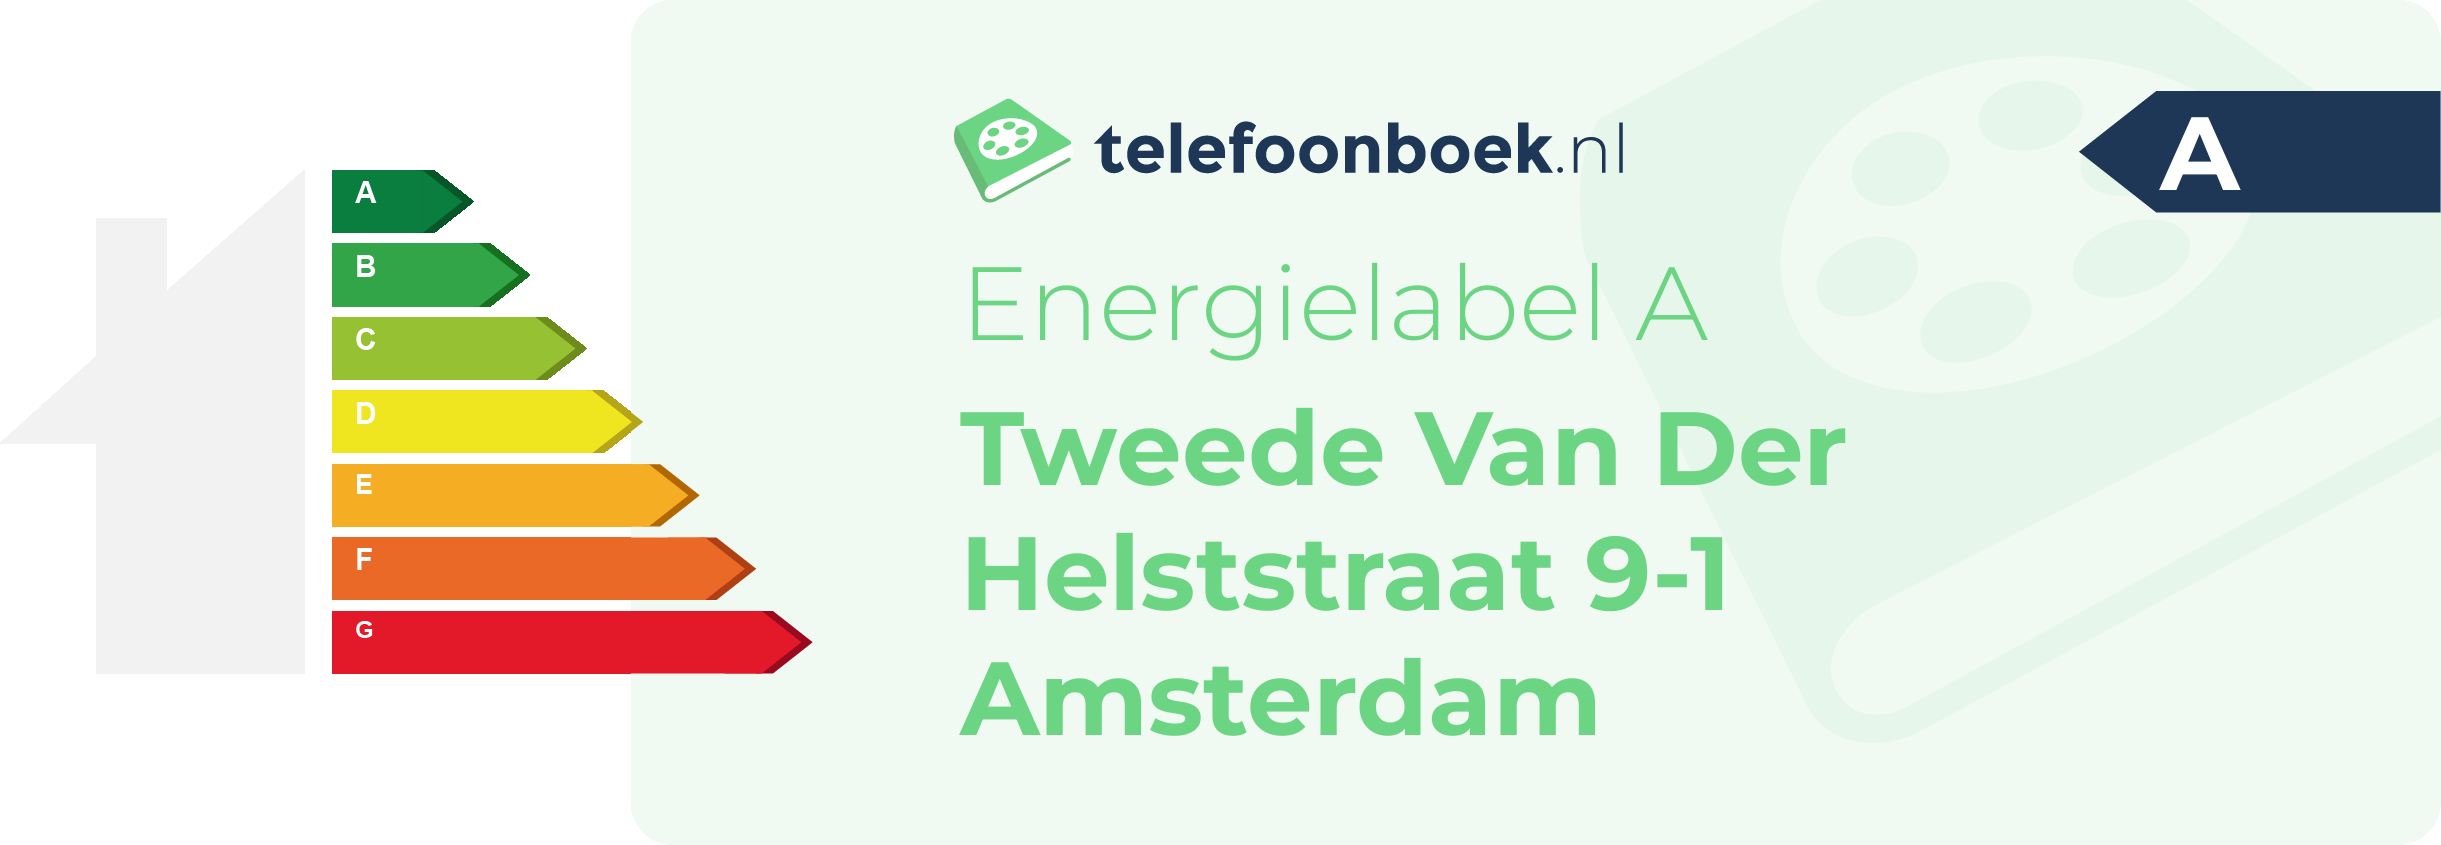 Energielabel Tweede Van Der Helststraat 9-1 Amsterdam